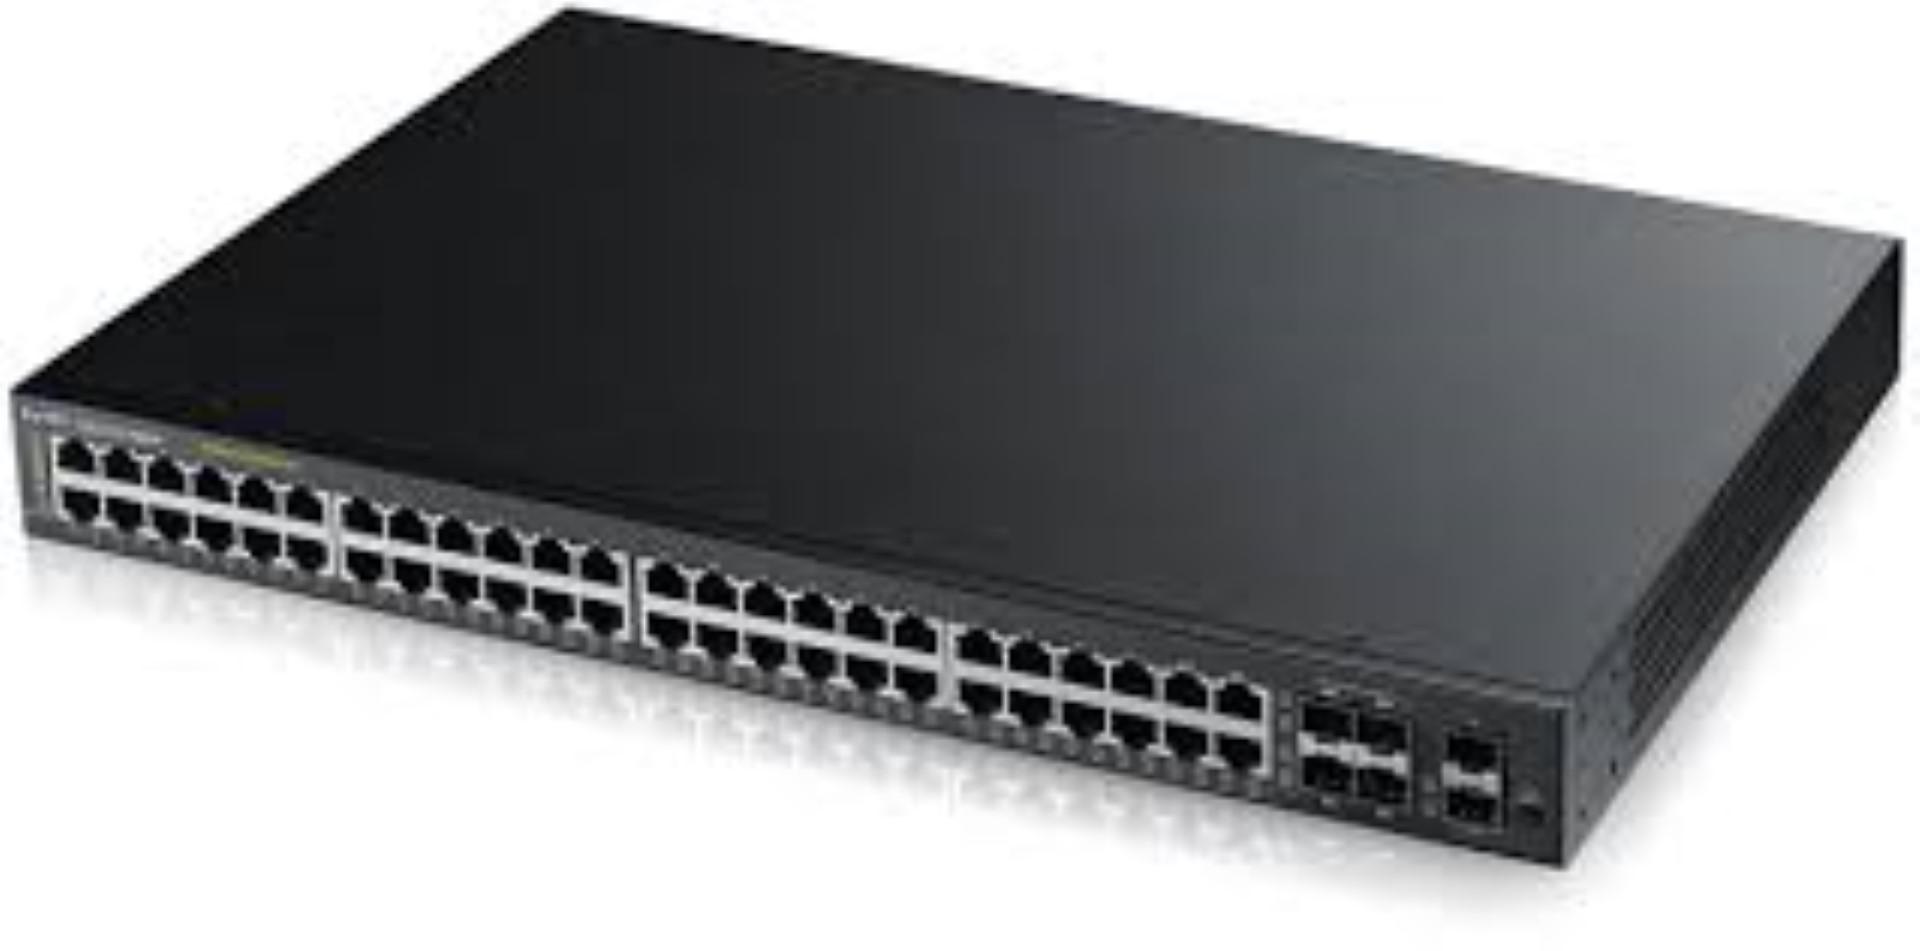 Switch Zyxel GS2210-48, 48 port, 10/100/1000 Mbps